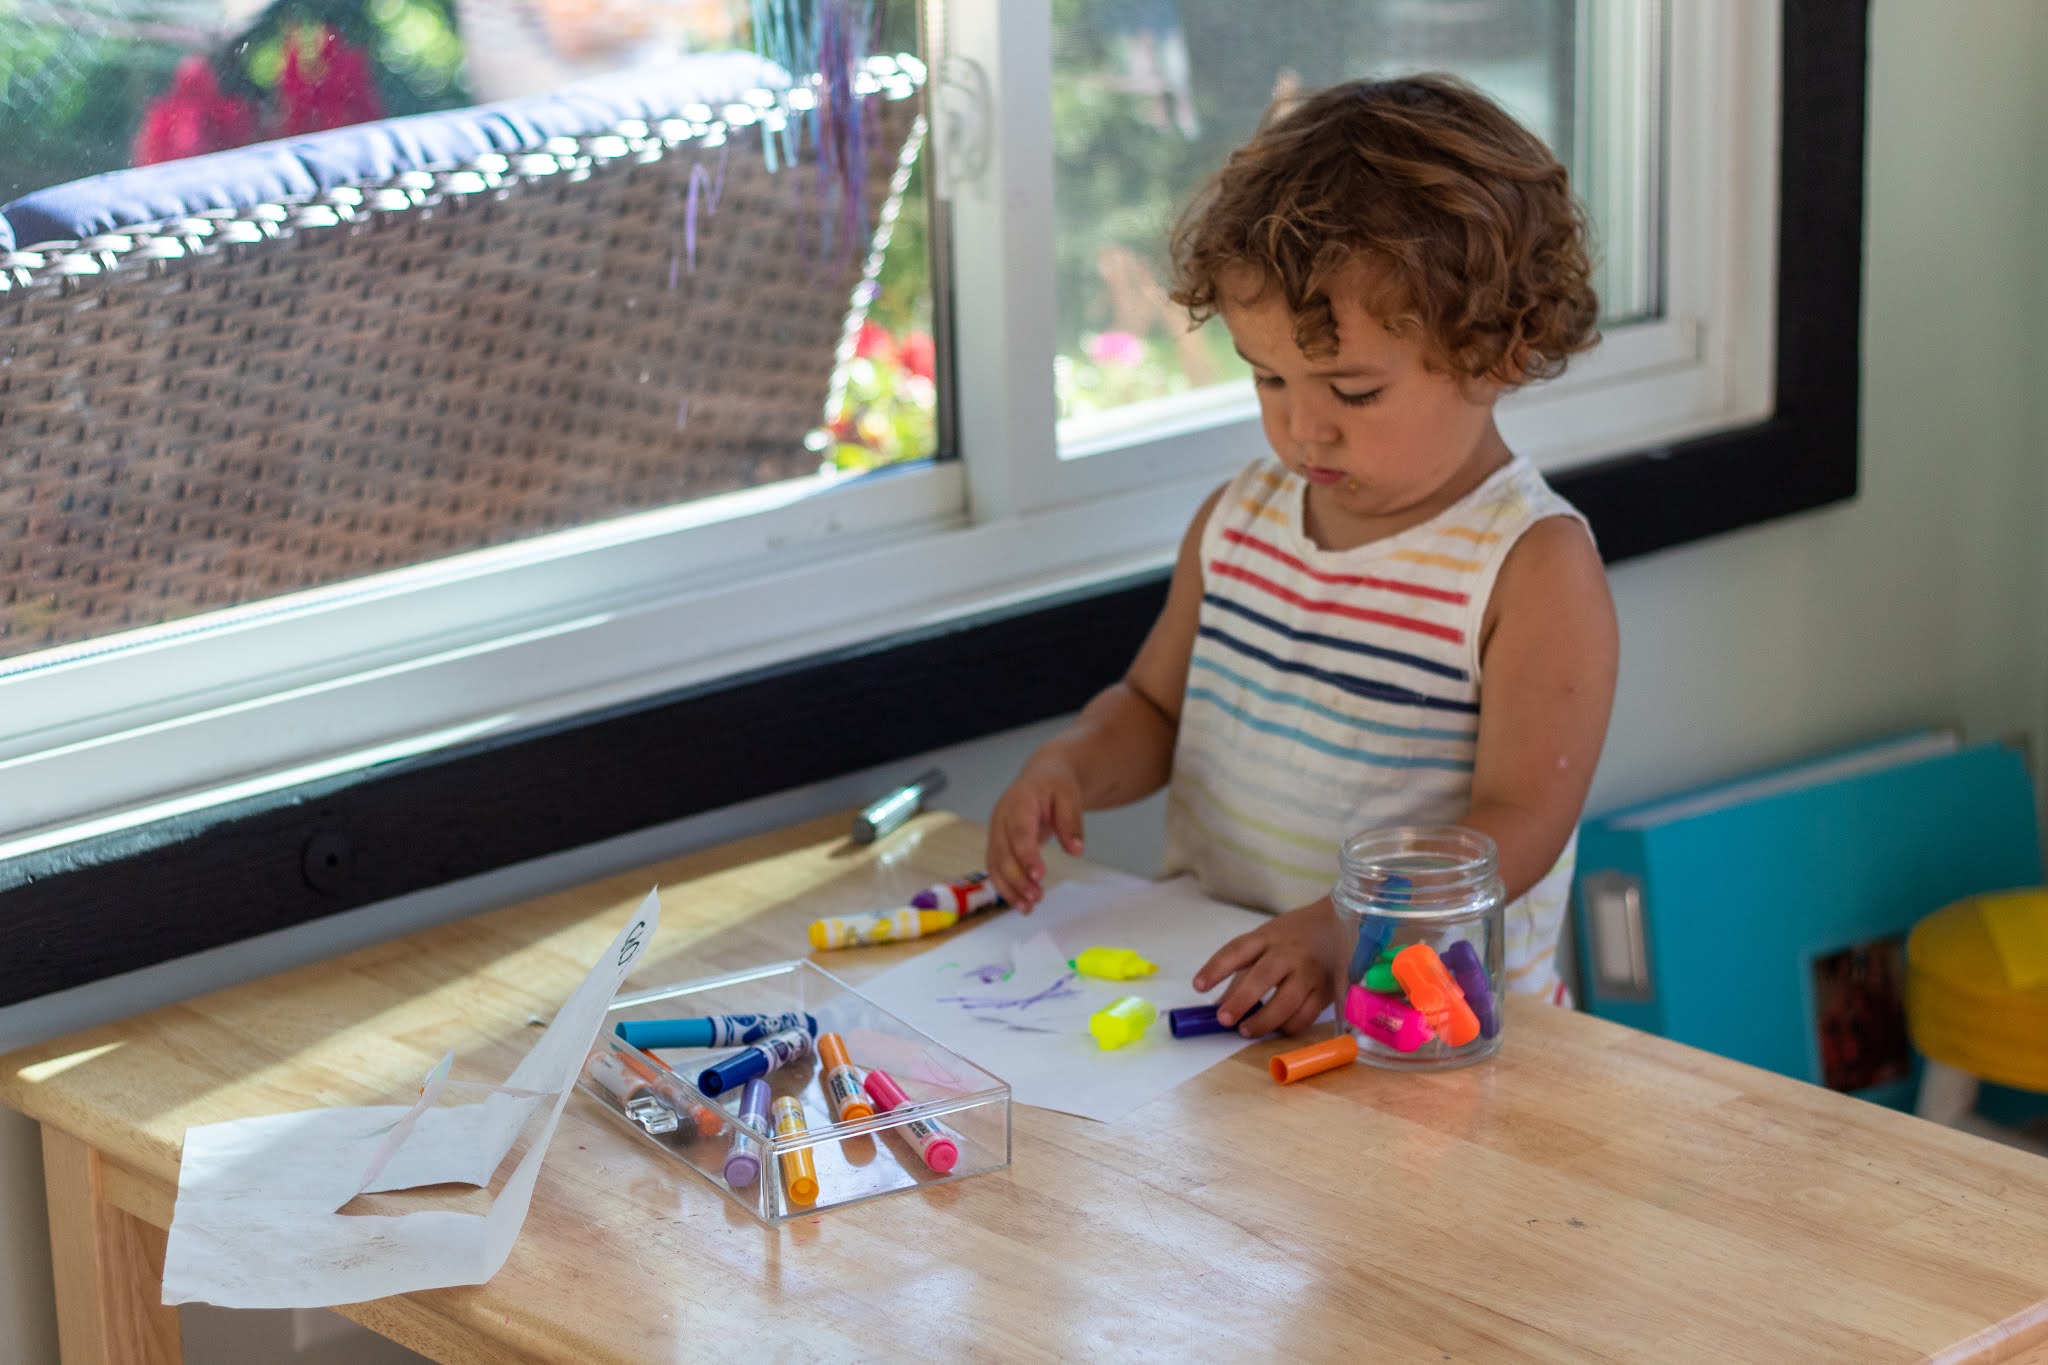 Best Art Materials for Toddlers by a Montessori Art Teacher - how